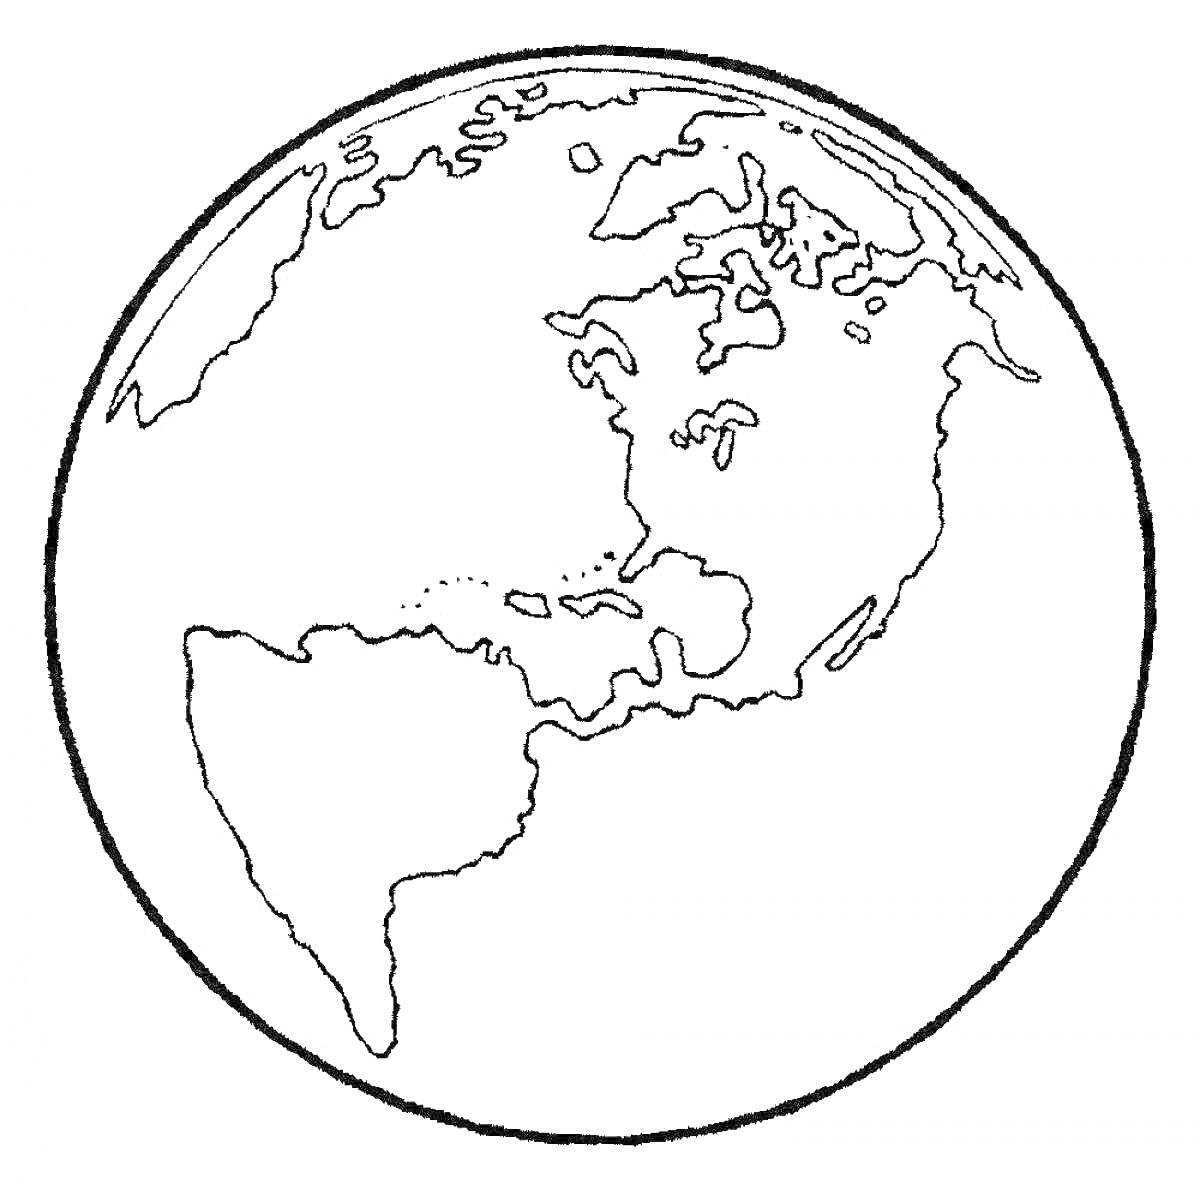 Контурное изображение Земли с континентами Северная Америка, Южная Америка, Европа, и Африка